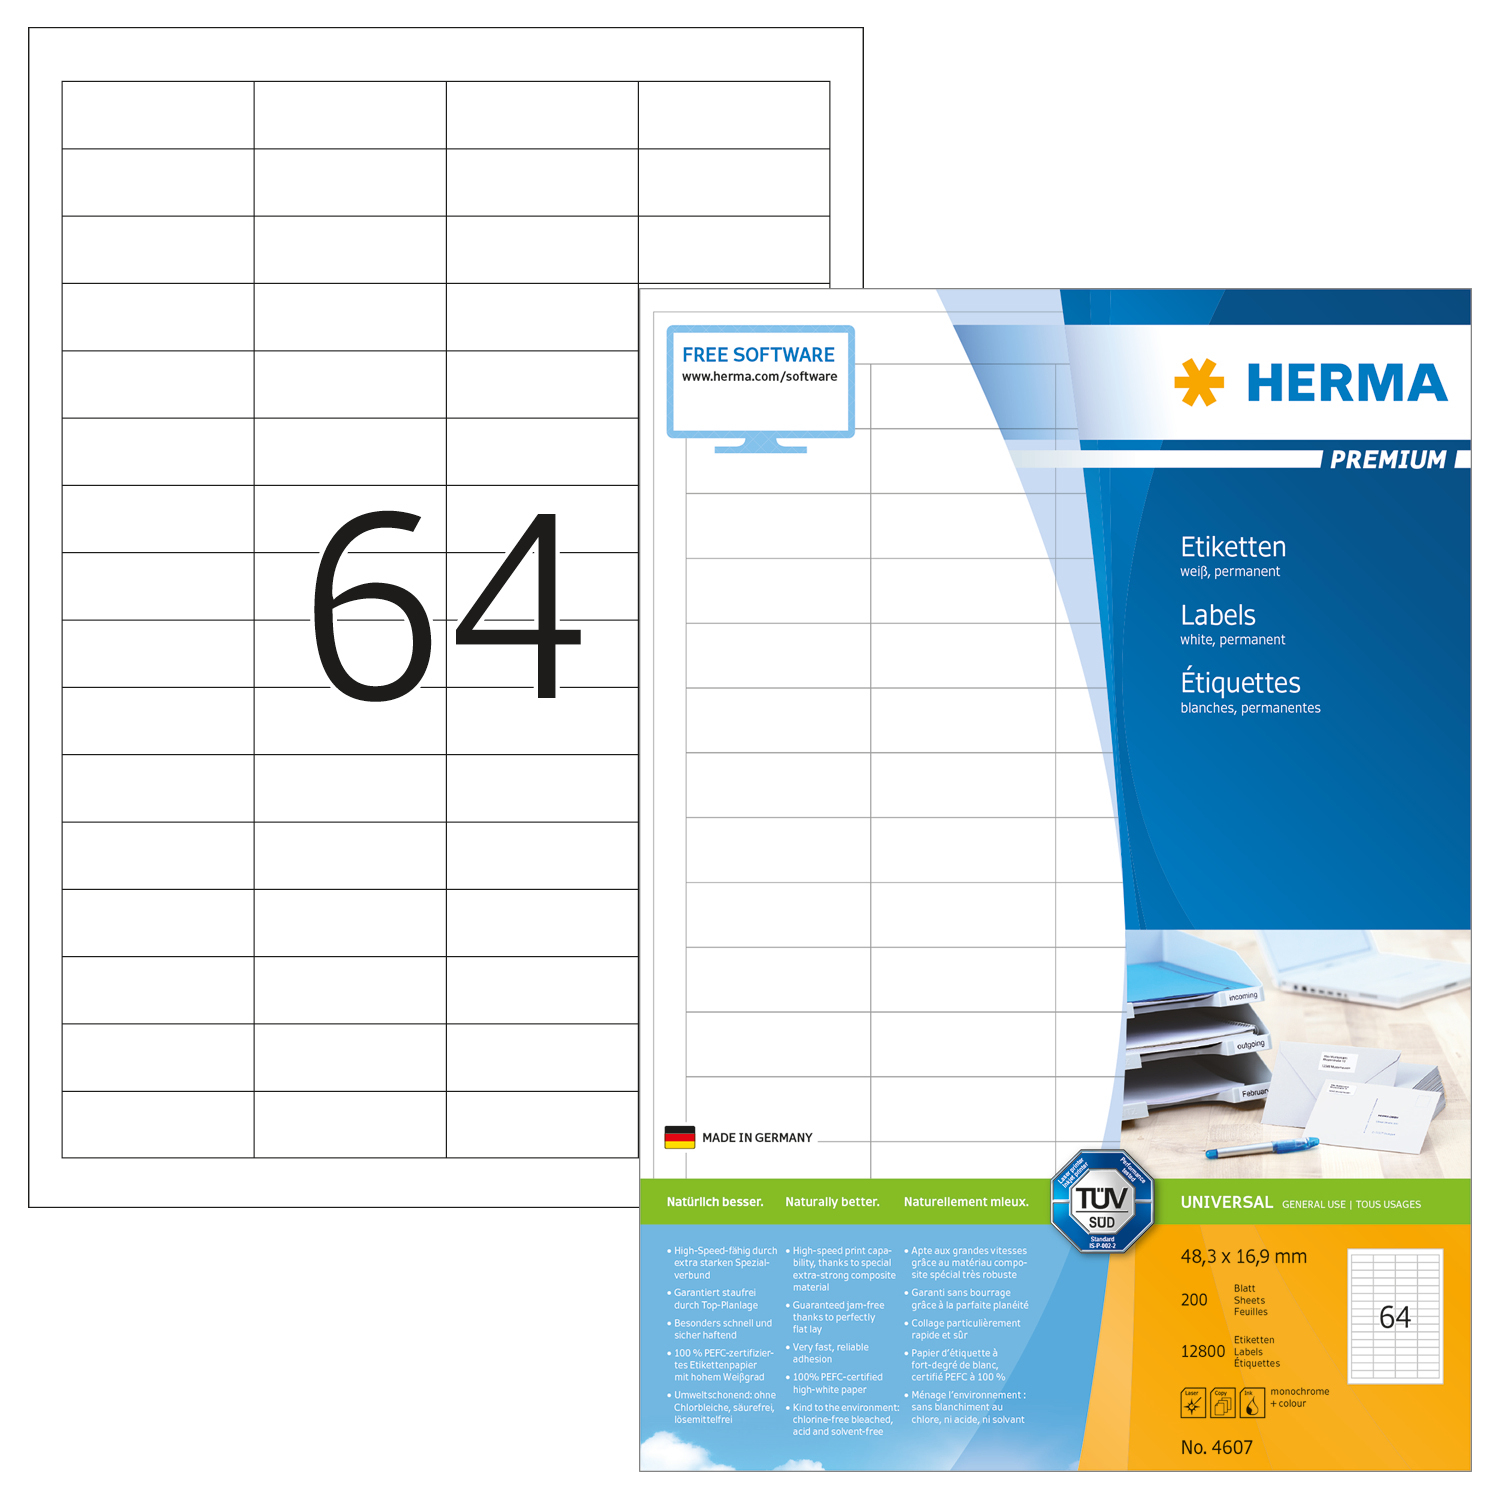 HERMA Etiquettes Premium 48,3×16,9mm 4607 blanc 12800 pcs. blanc 12800 pcs.